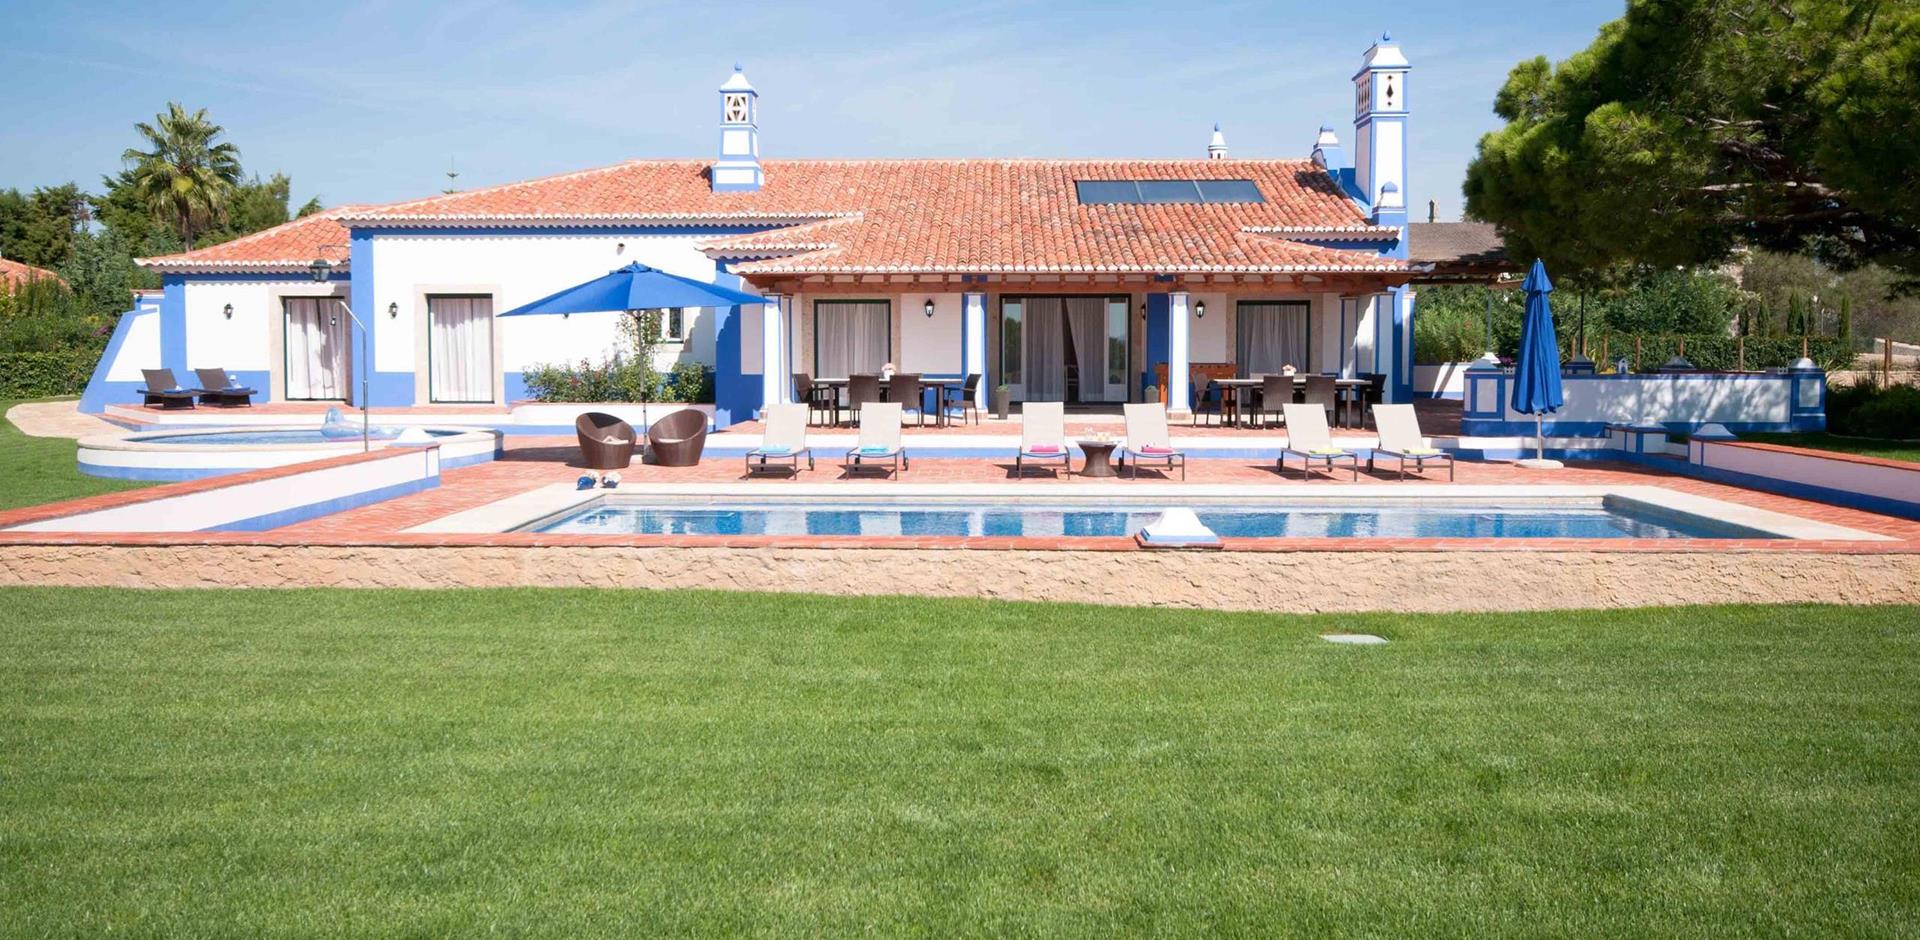 Pool Area, Casa Cynthia, Algarve